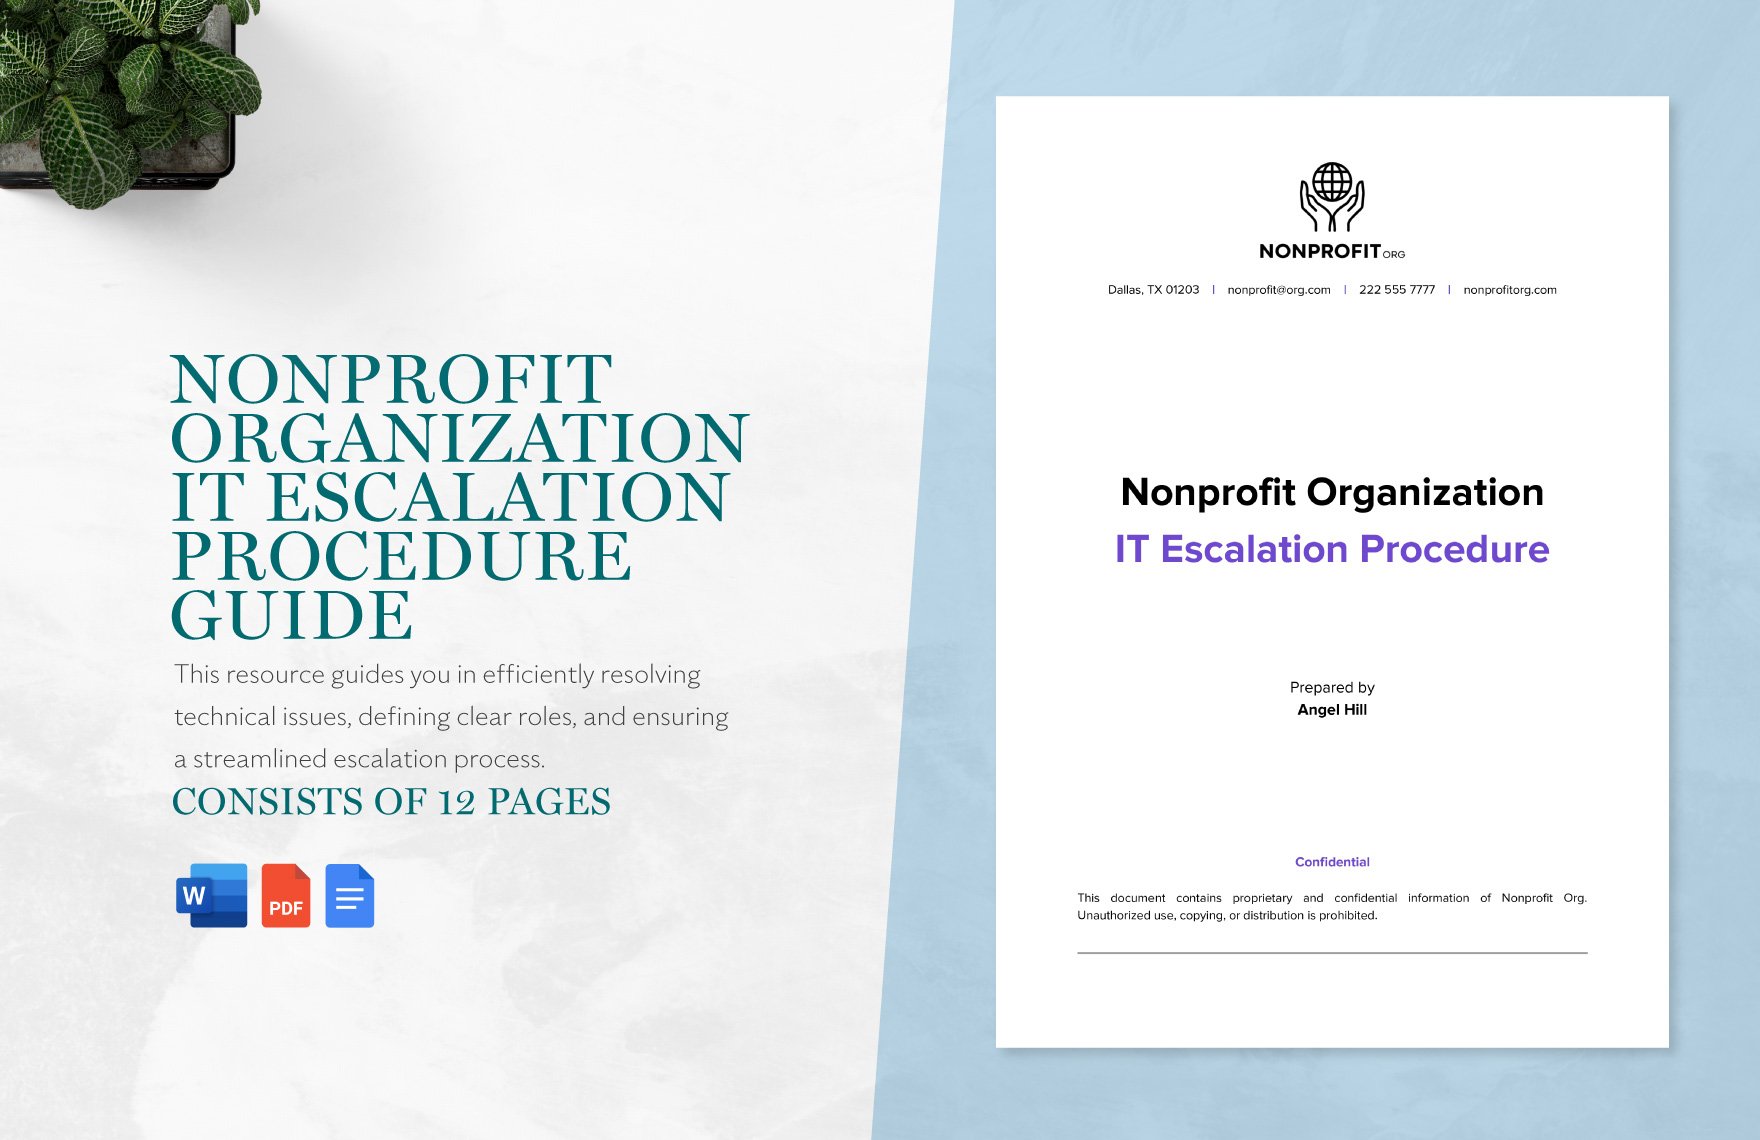 Nonprofit Organization IT Escalation Procedure Template in Word, Google Docs, PDF